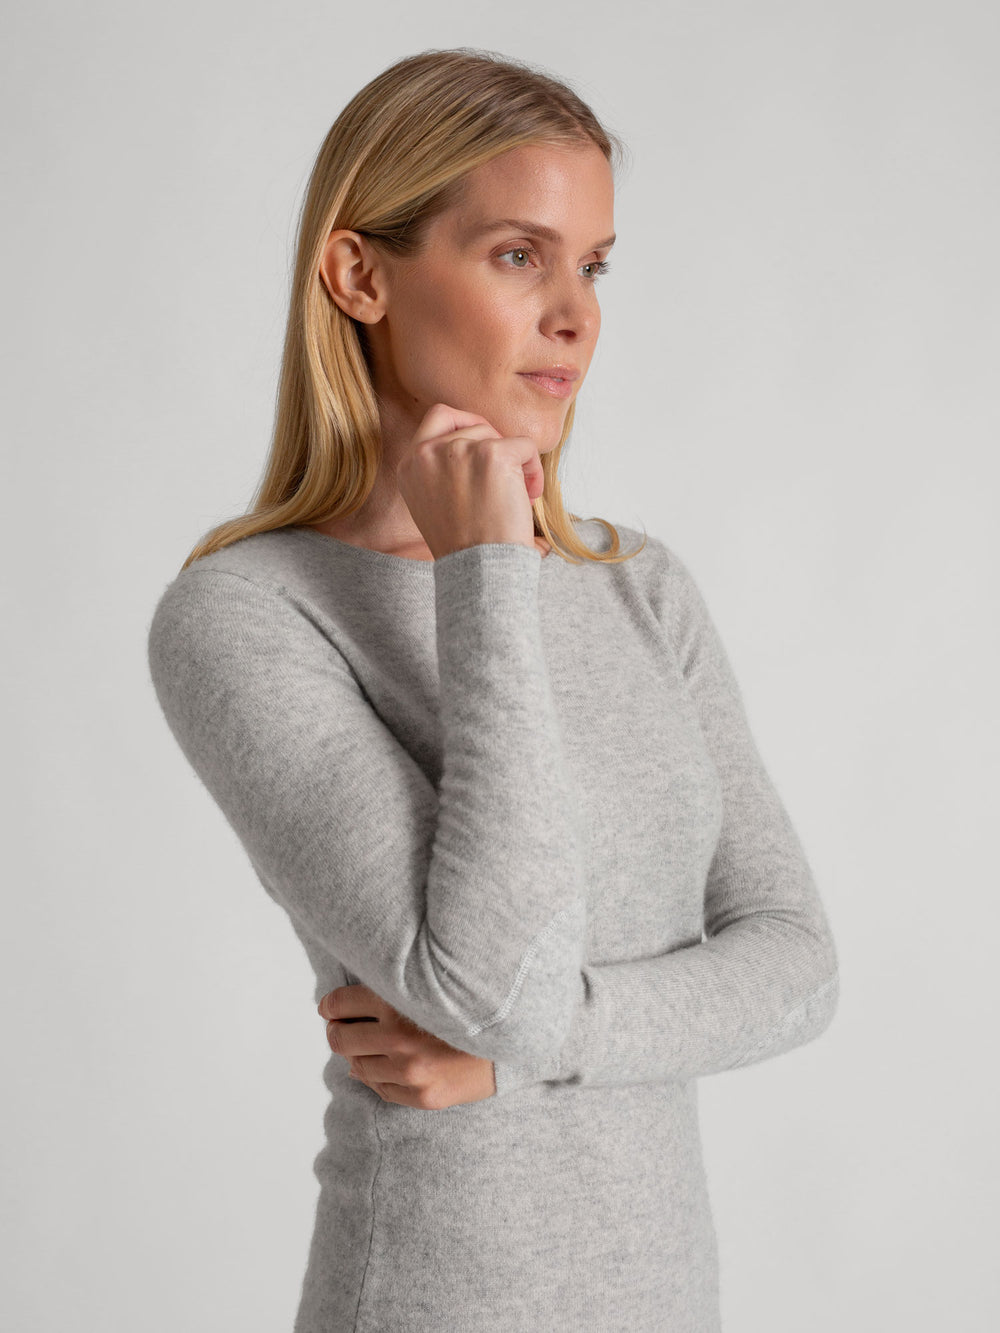 Cashmere dress "Classy" in 100% pure cashmere. Scandinavian design by Kashmina. Color: Light Grey.